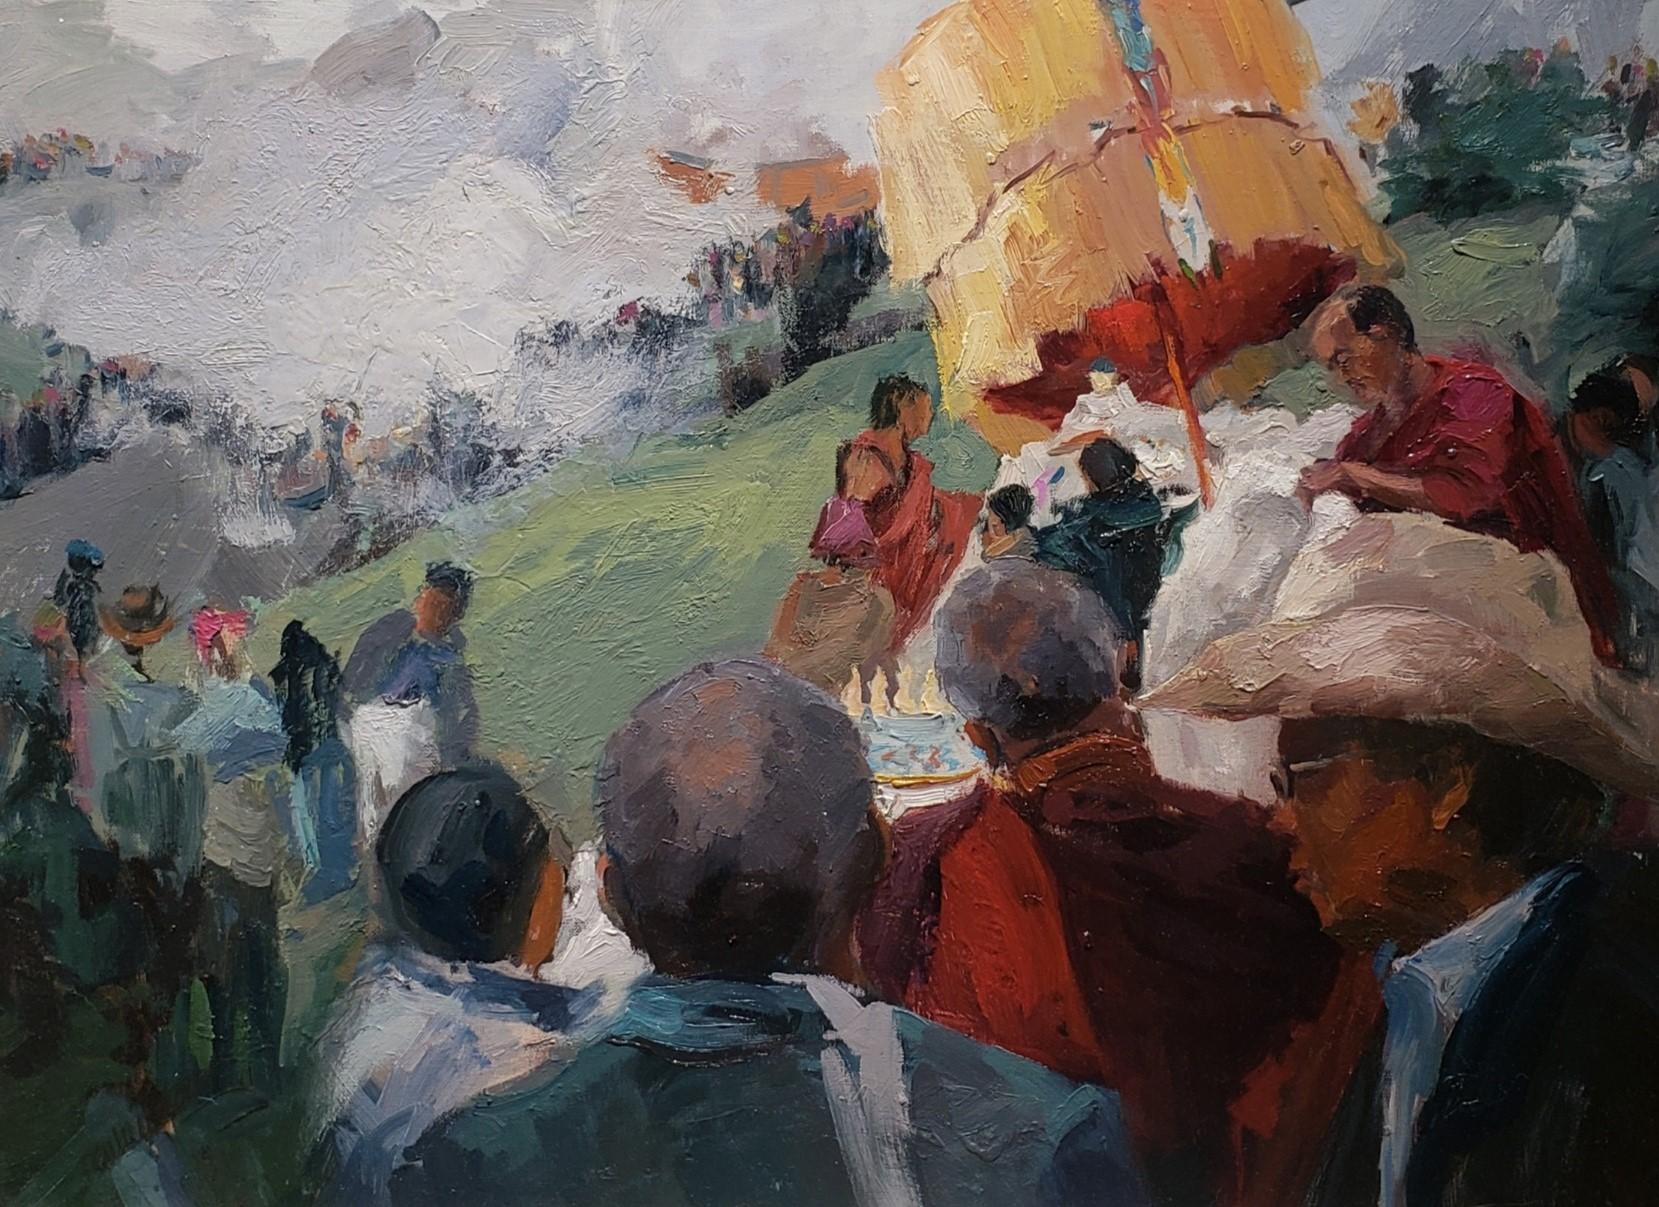 Market Vendor-Tibet, oil painting, Award of Excellence, Prayer Flags, framed - Painting by Paulette Lee